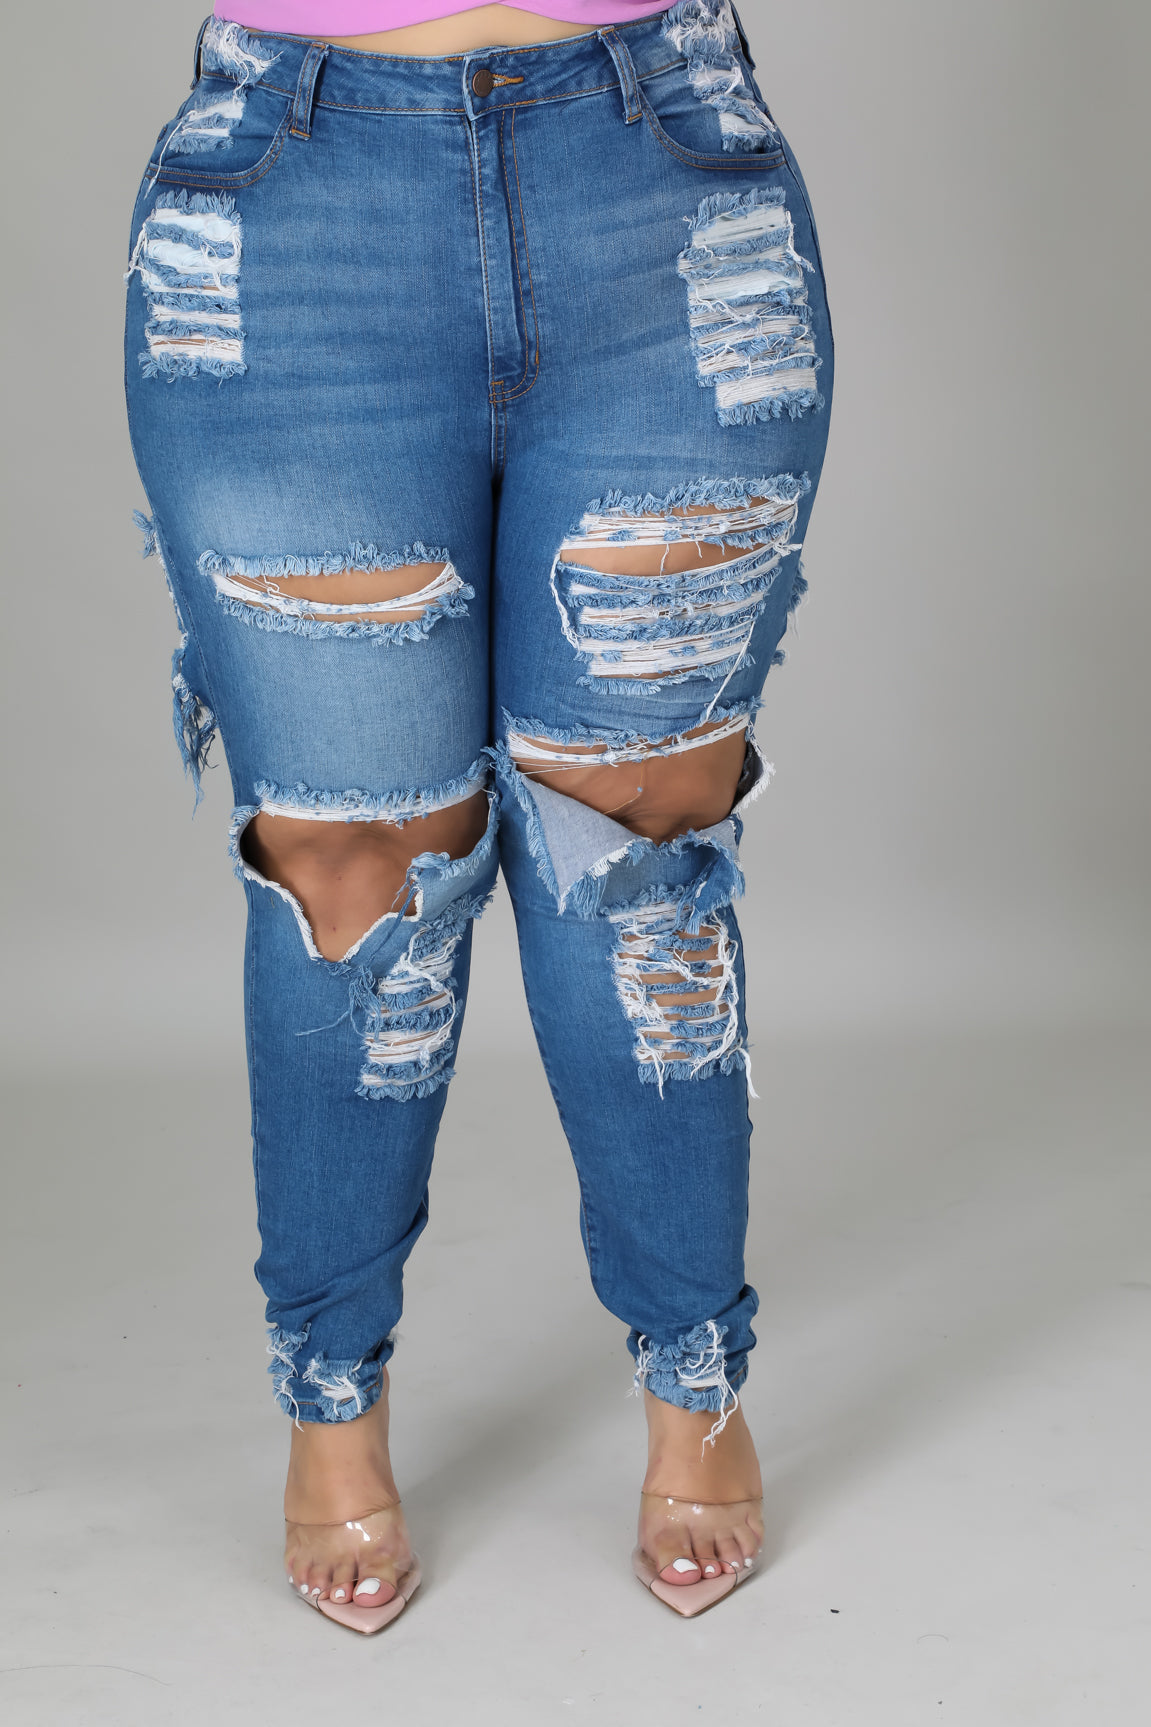 Khloe Jeans